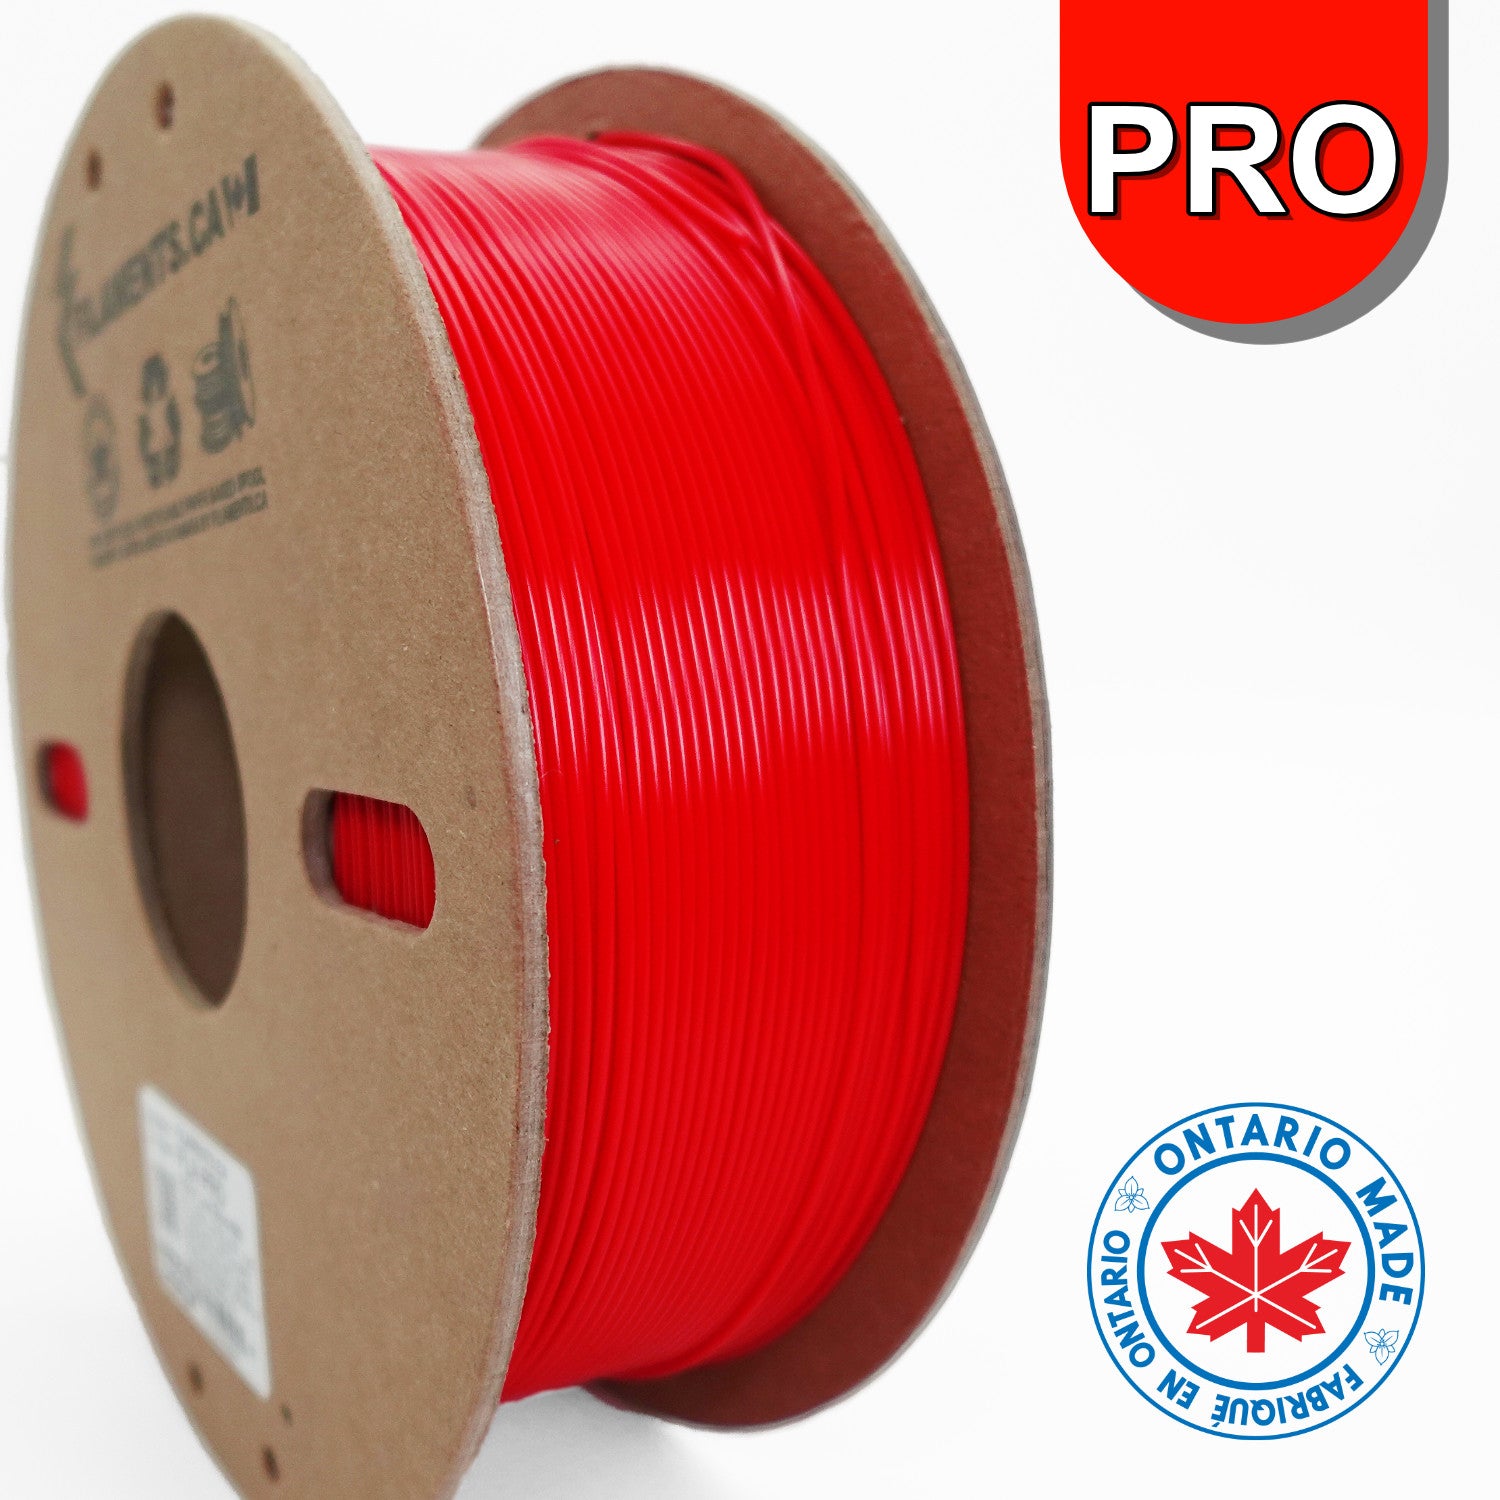 PLA PRO (Tough/High Impact) Filament - Low Gloss RED - 1.75mm - 1KG –